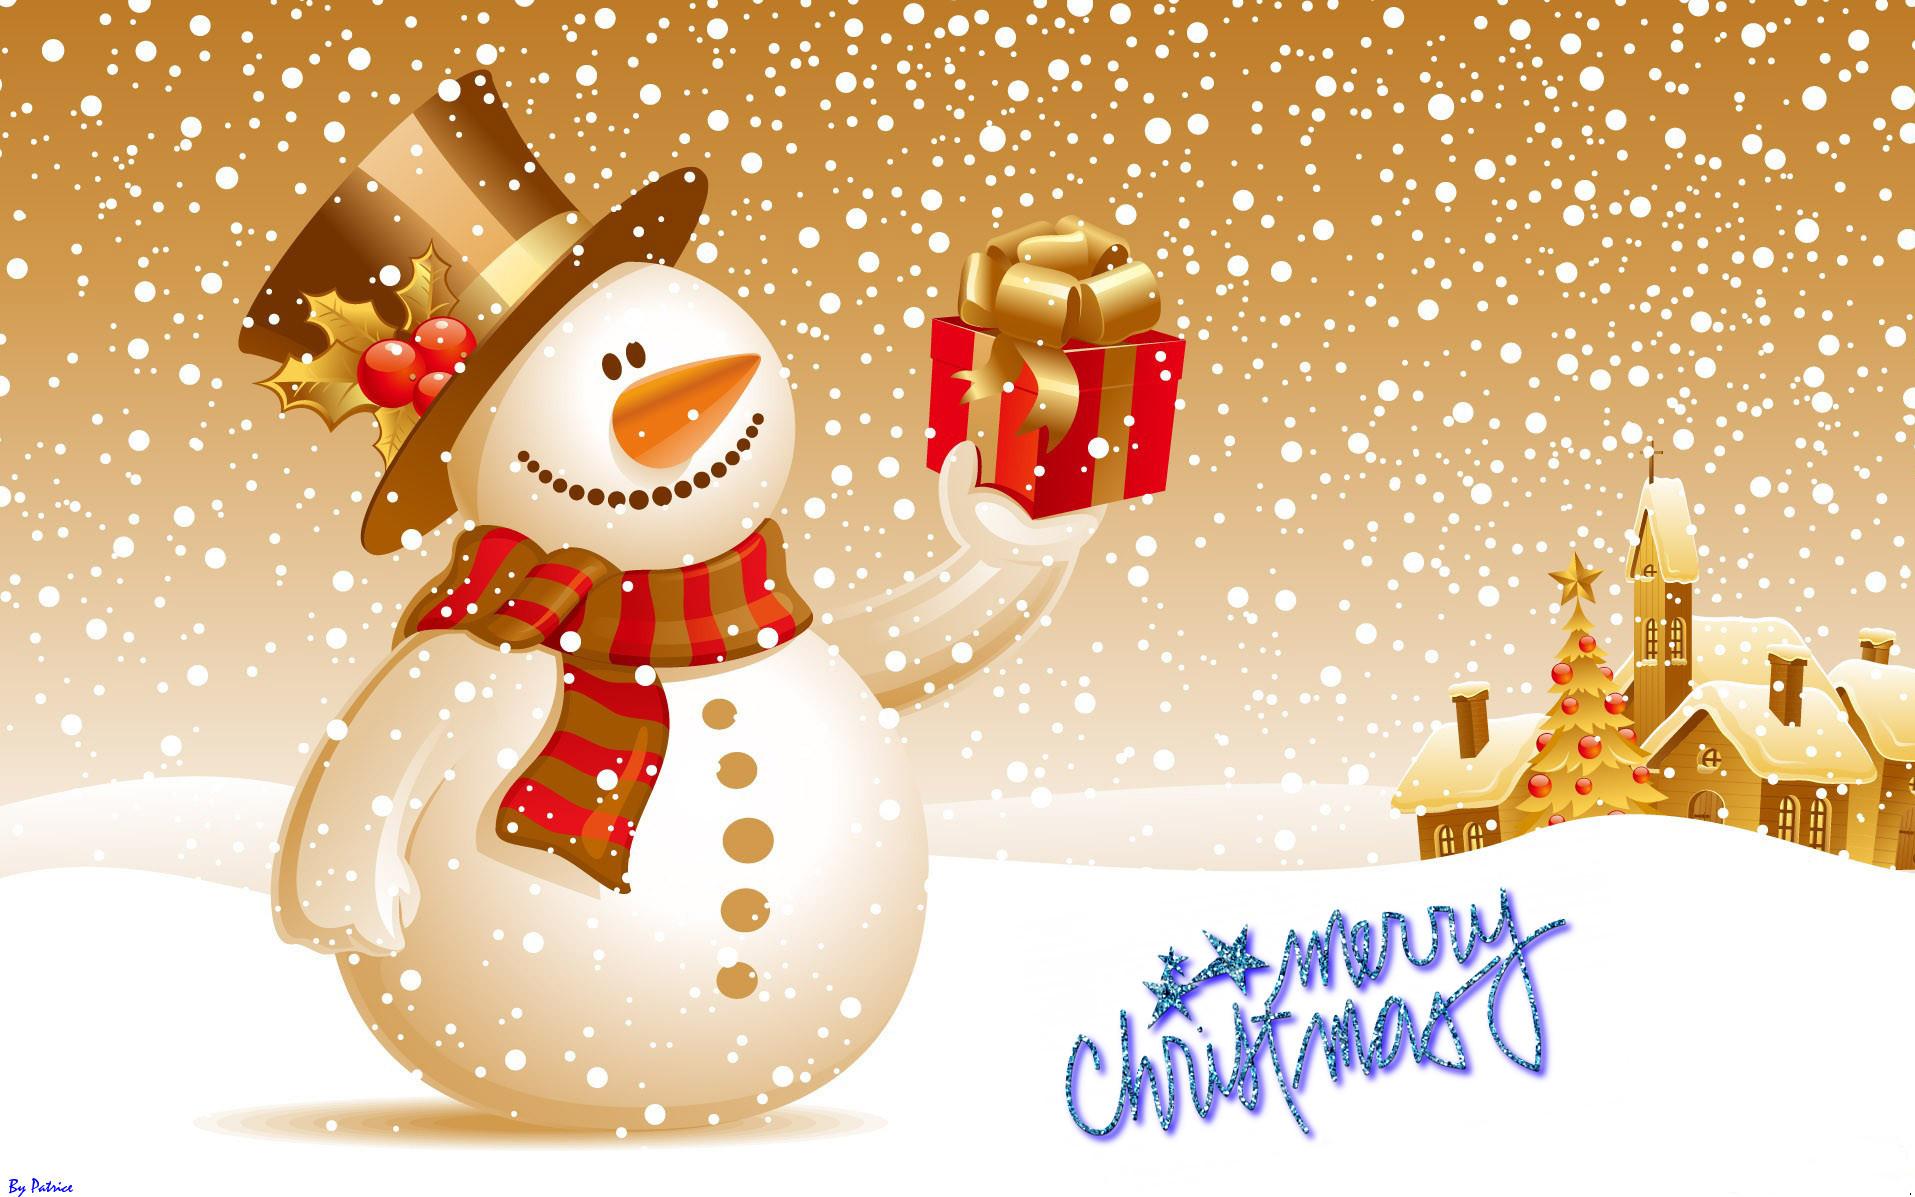 Cute Snowman Merry Christmas Images Wallpaper 7426 Wallpaper computer